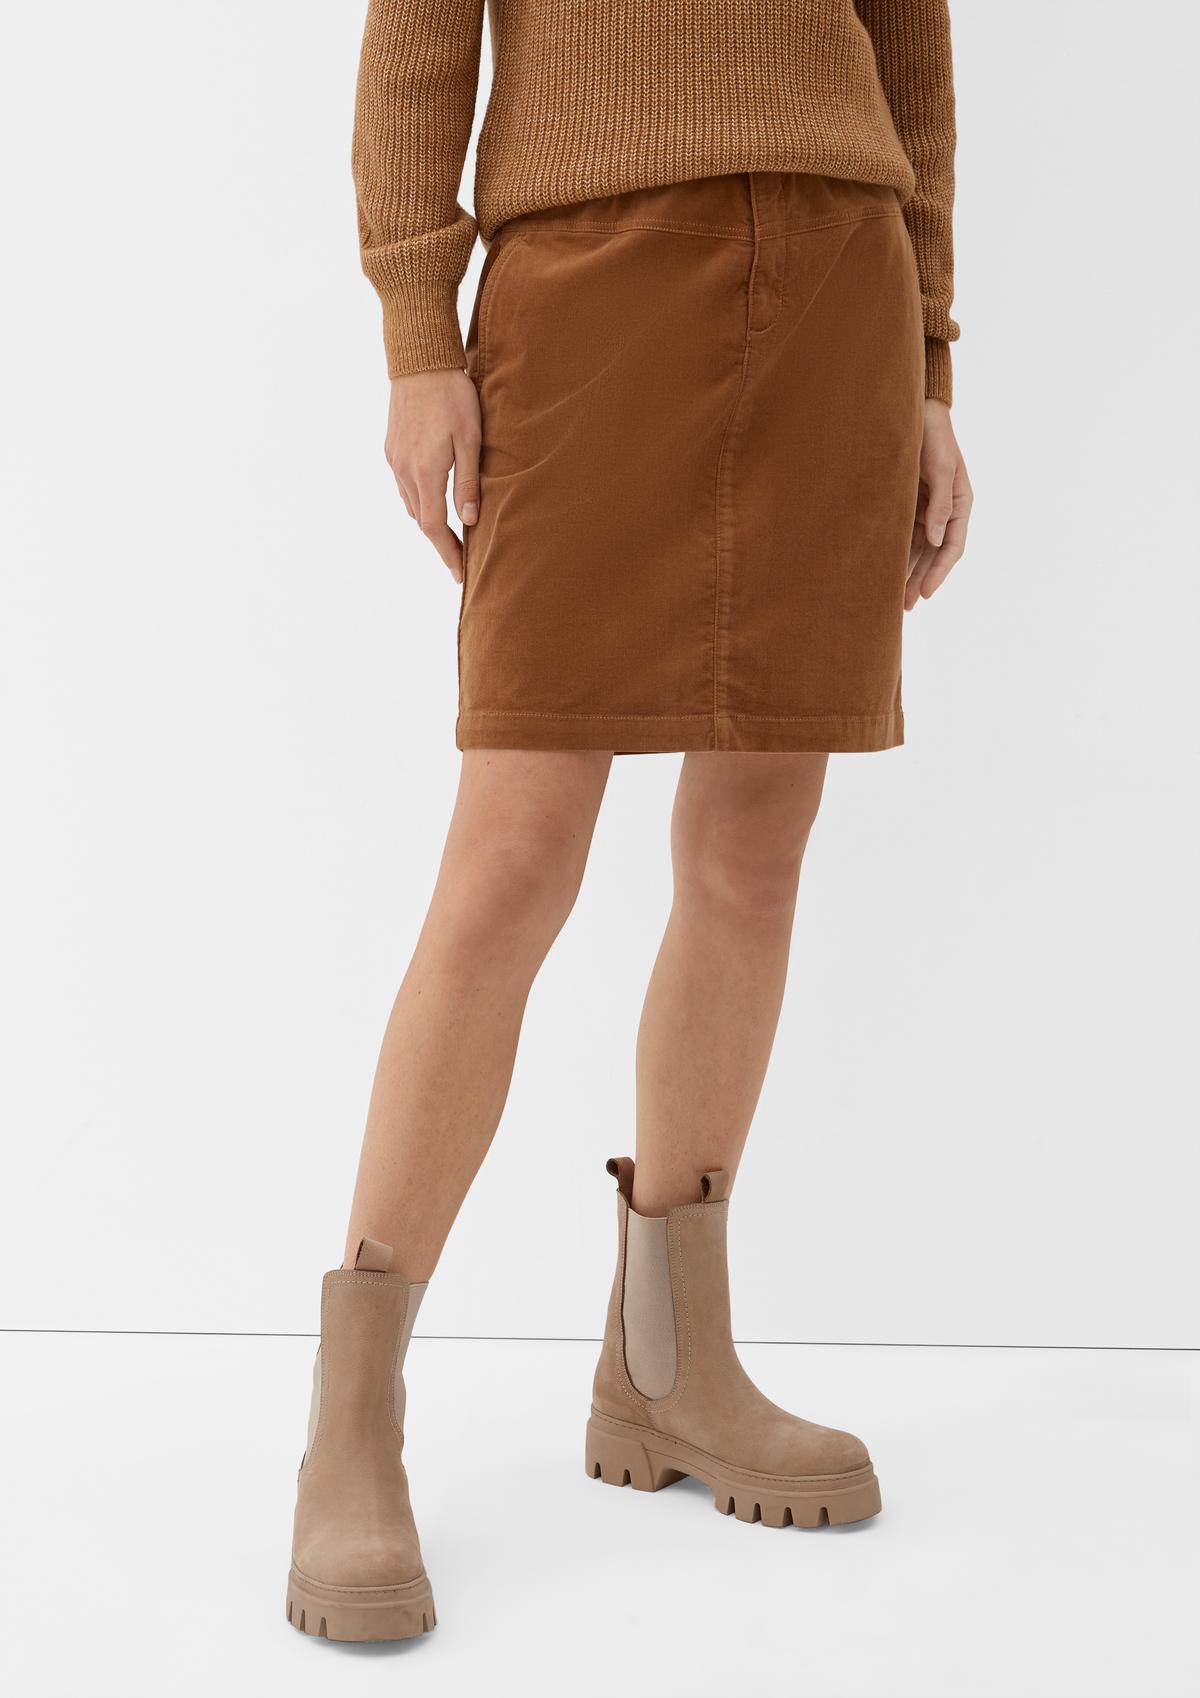 Skirt with a saddle yoke